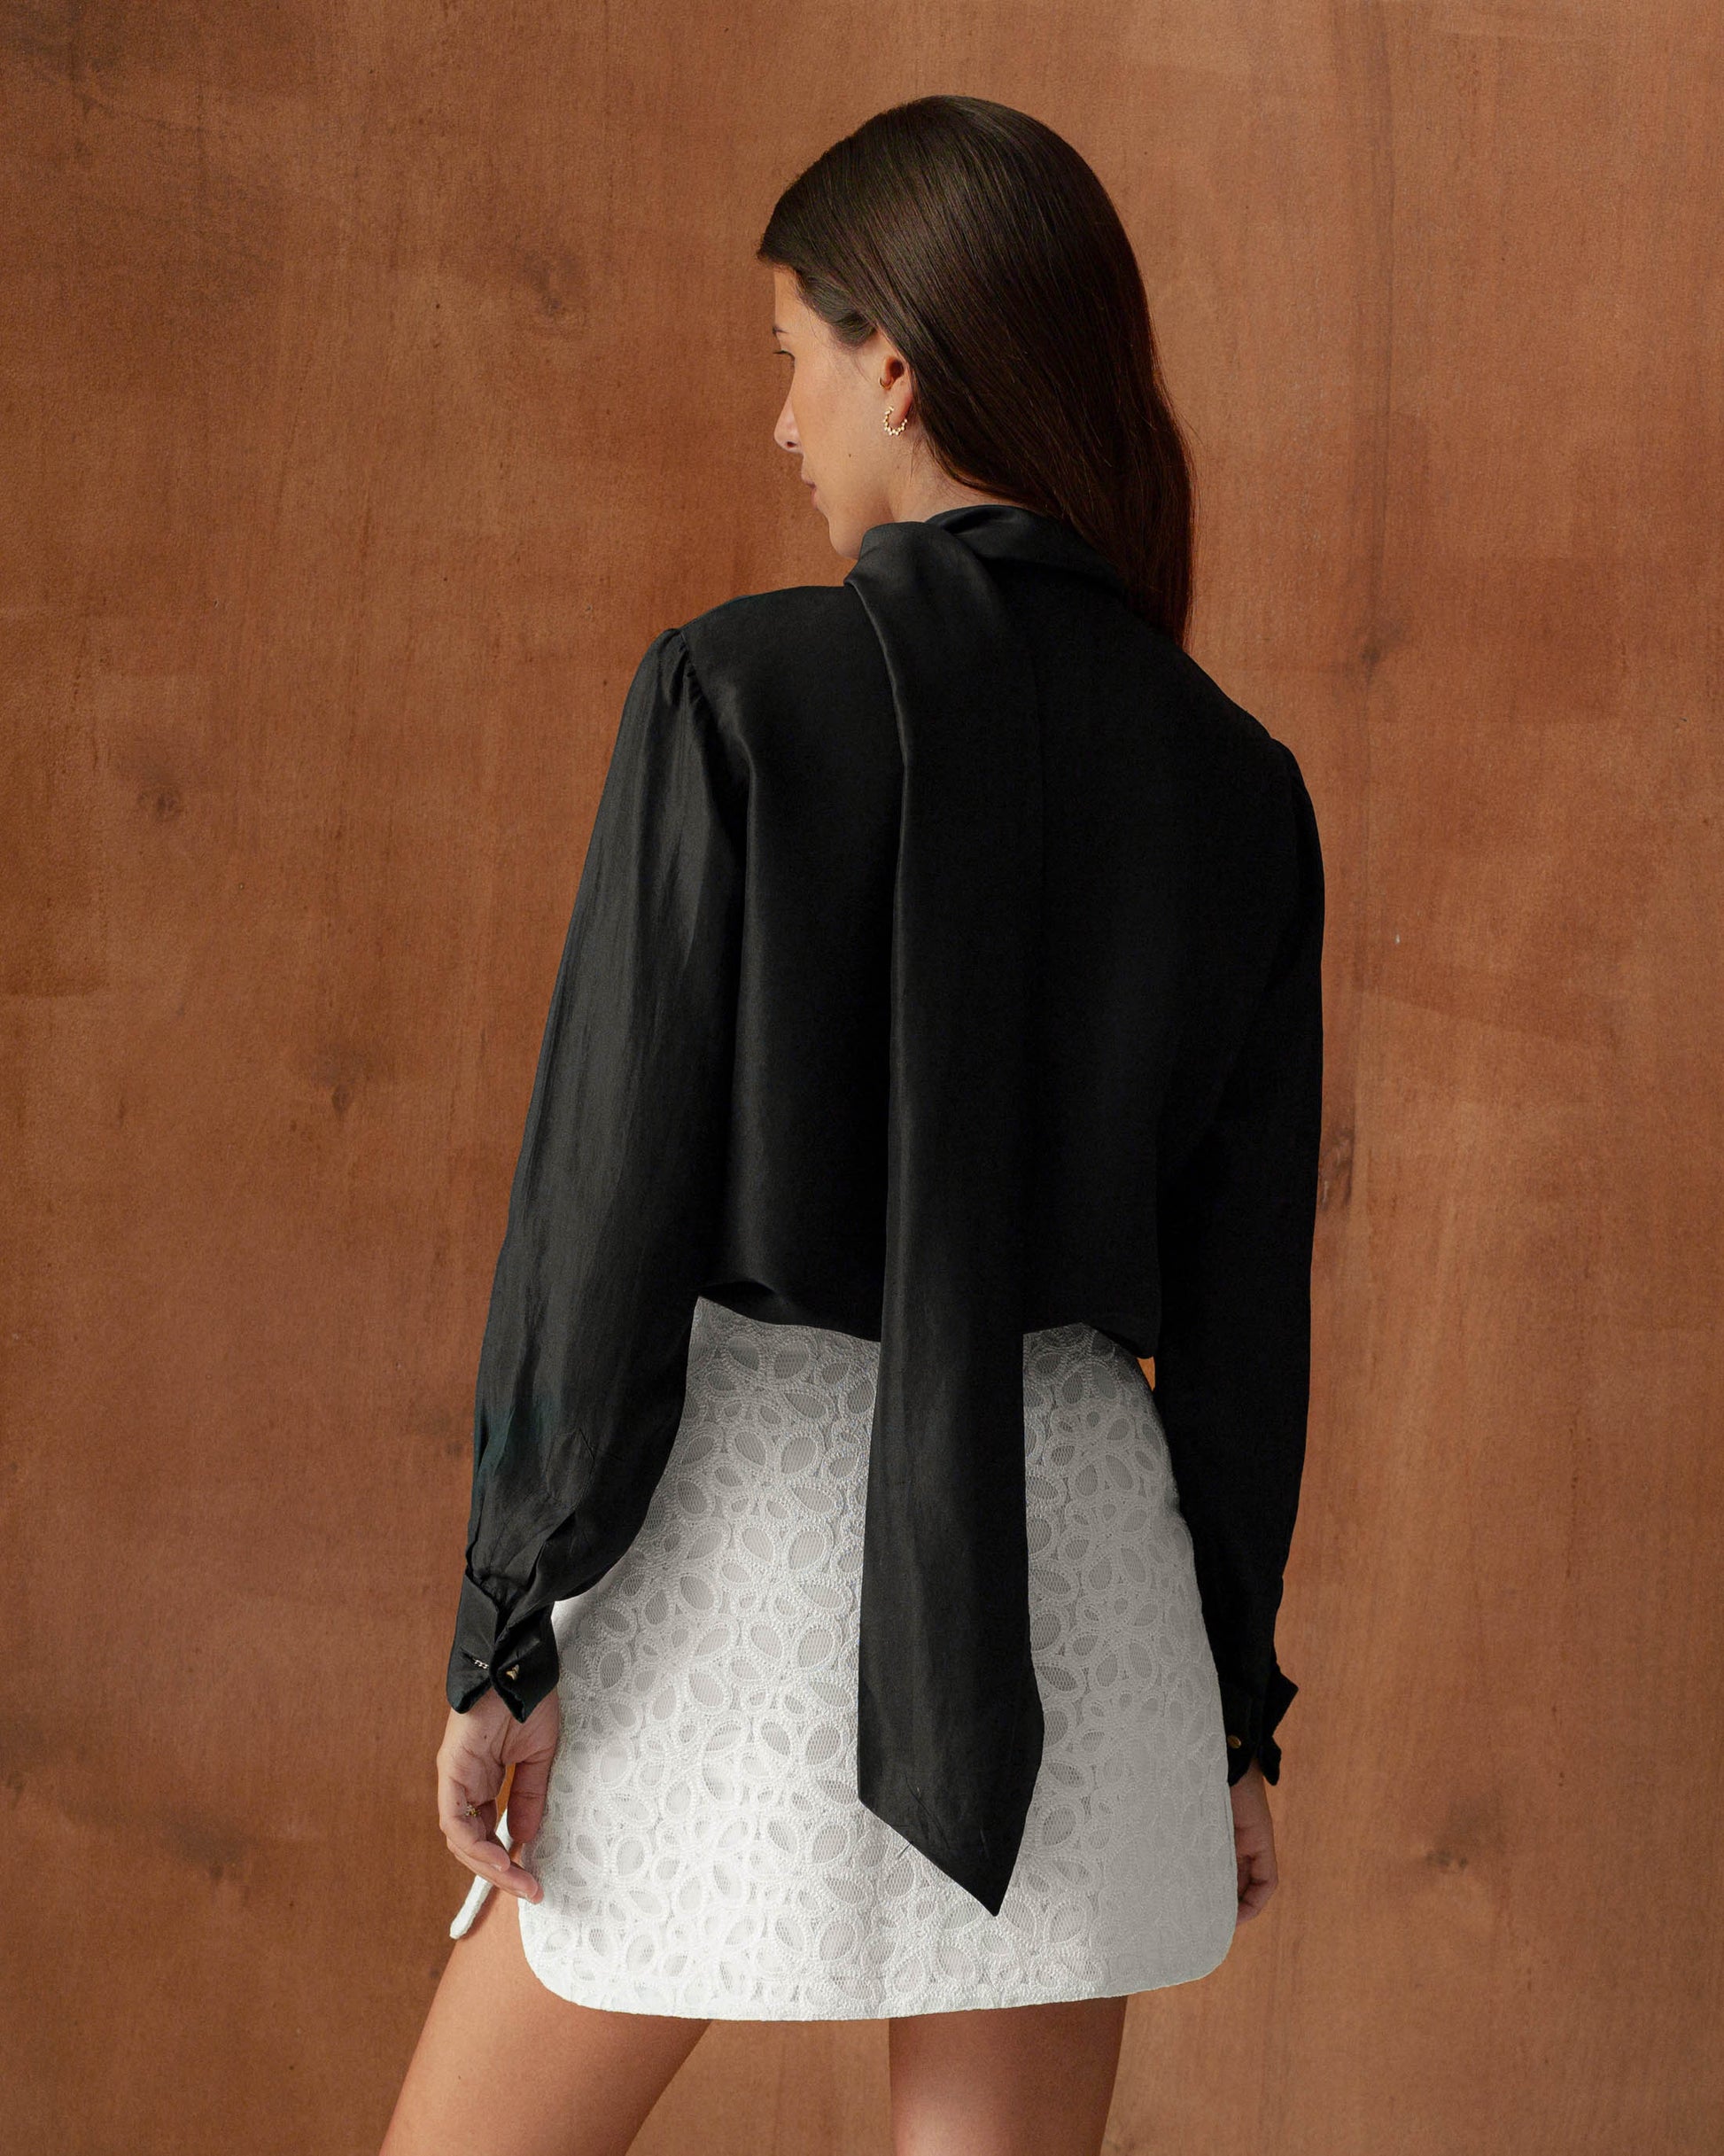 FALLON-shirt-saint laurent rive gauche-black-vintage-women-luxury-clothing-rare-fashion-curated-art